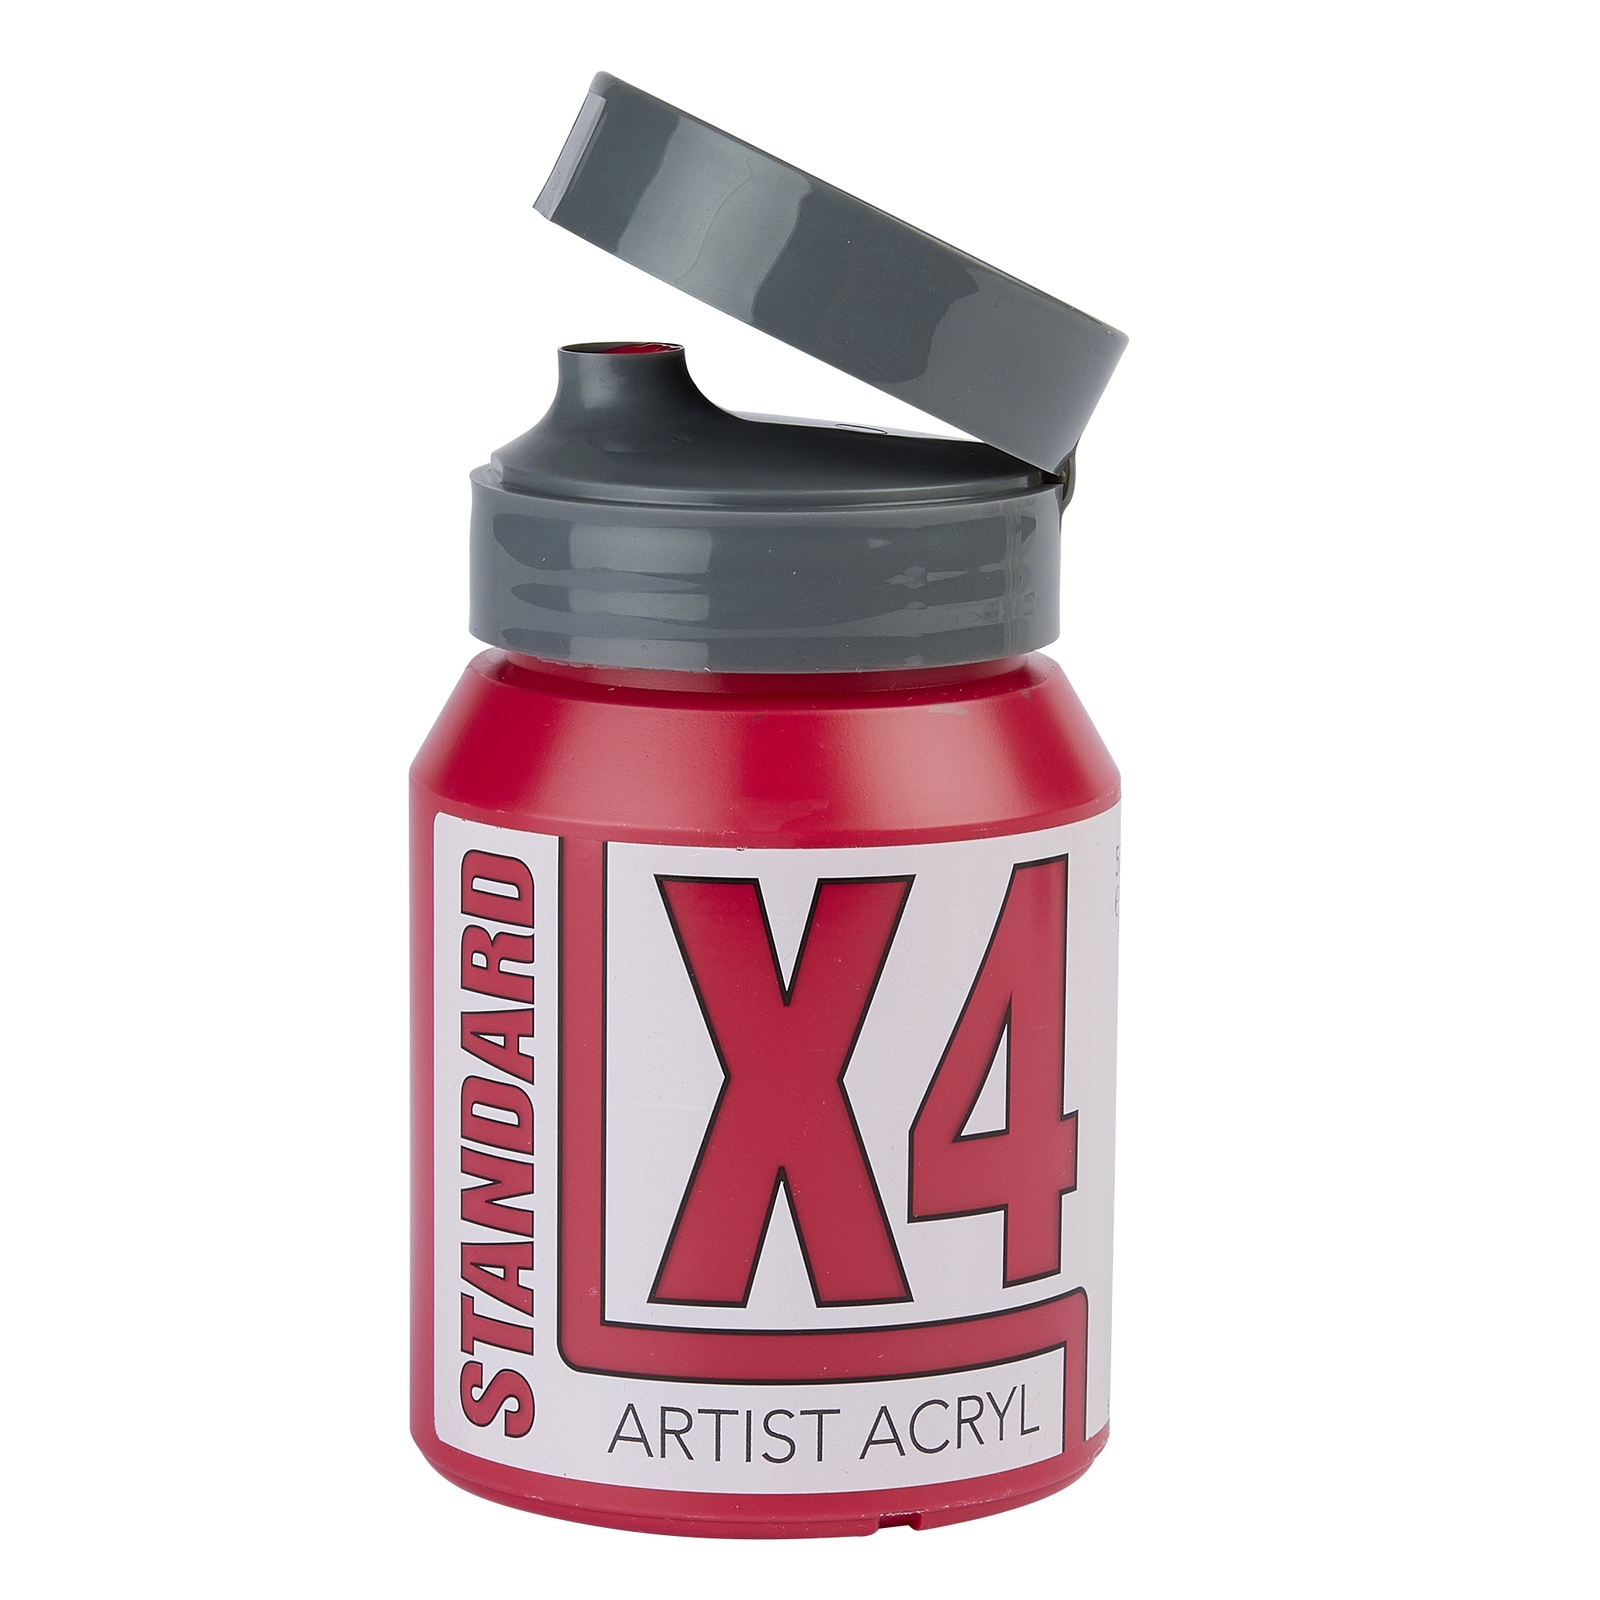 Specialist Crafts X4 Standard Primary Magenta Acryl/Acrylic Paint - 500ml - Each